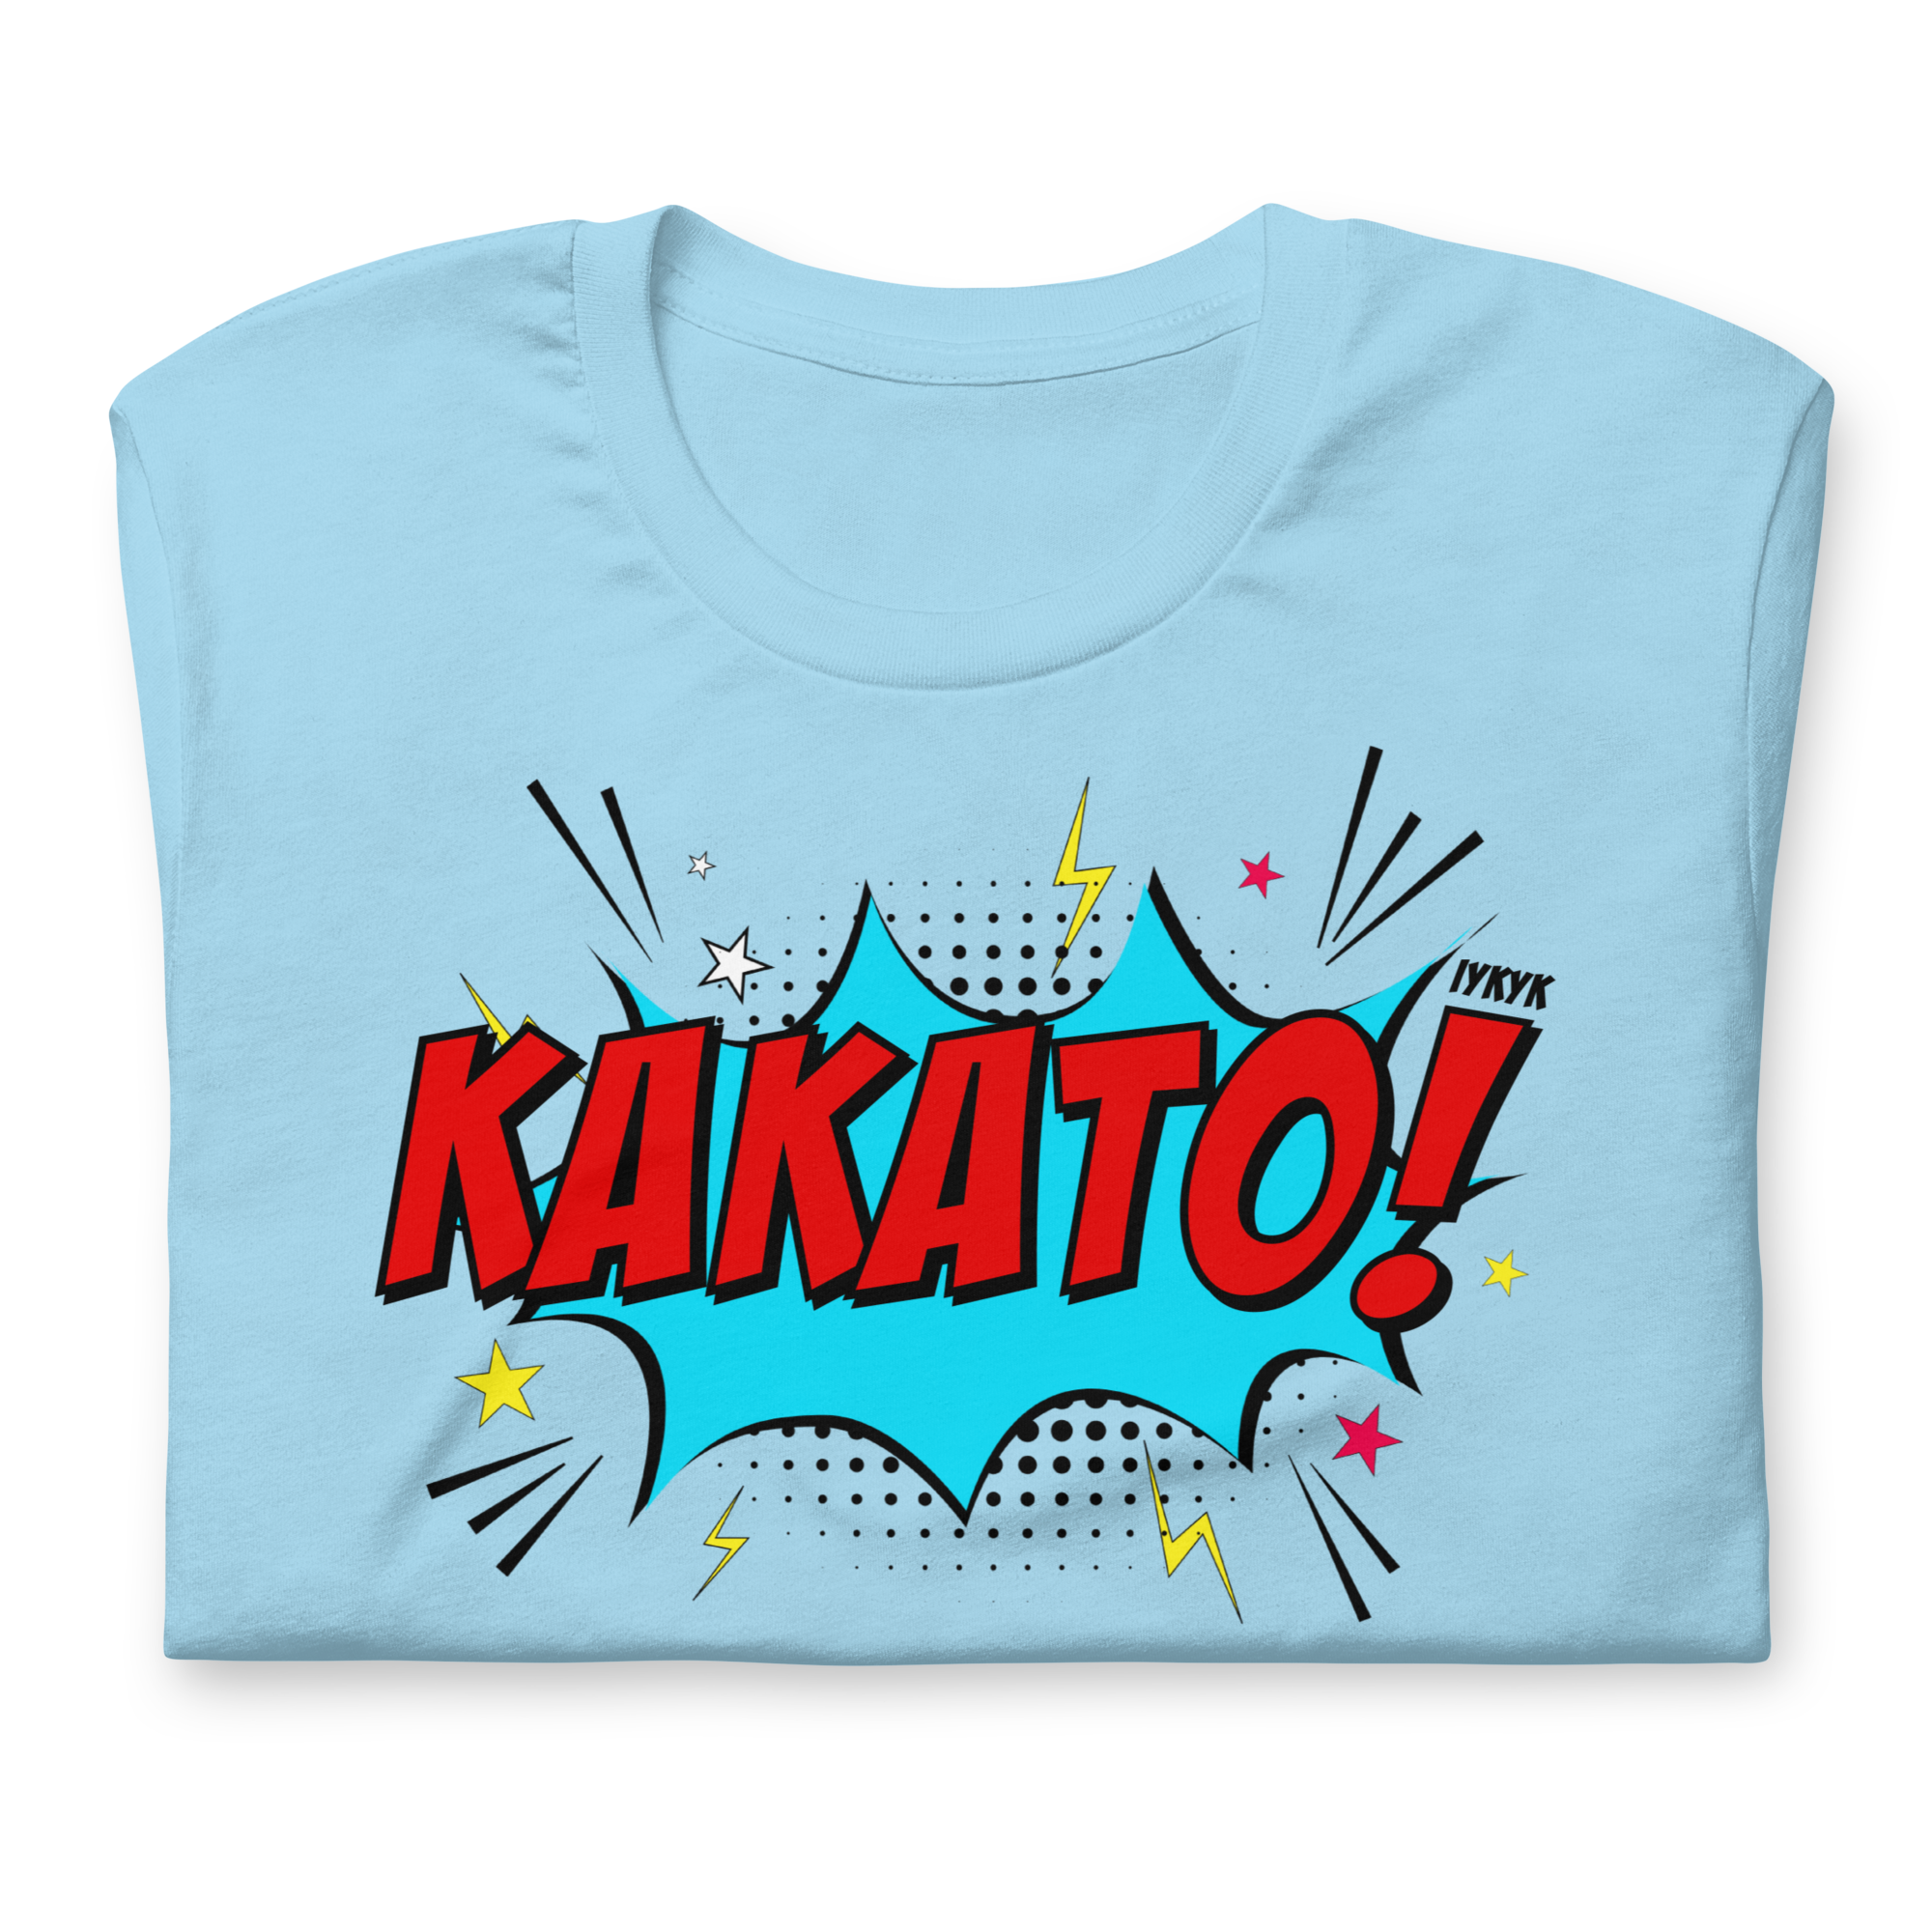 KAKATO T-Shirt (Free Shipping)